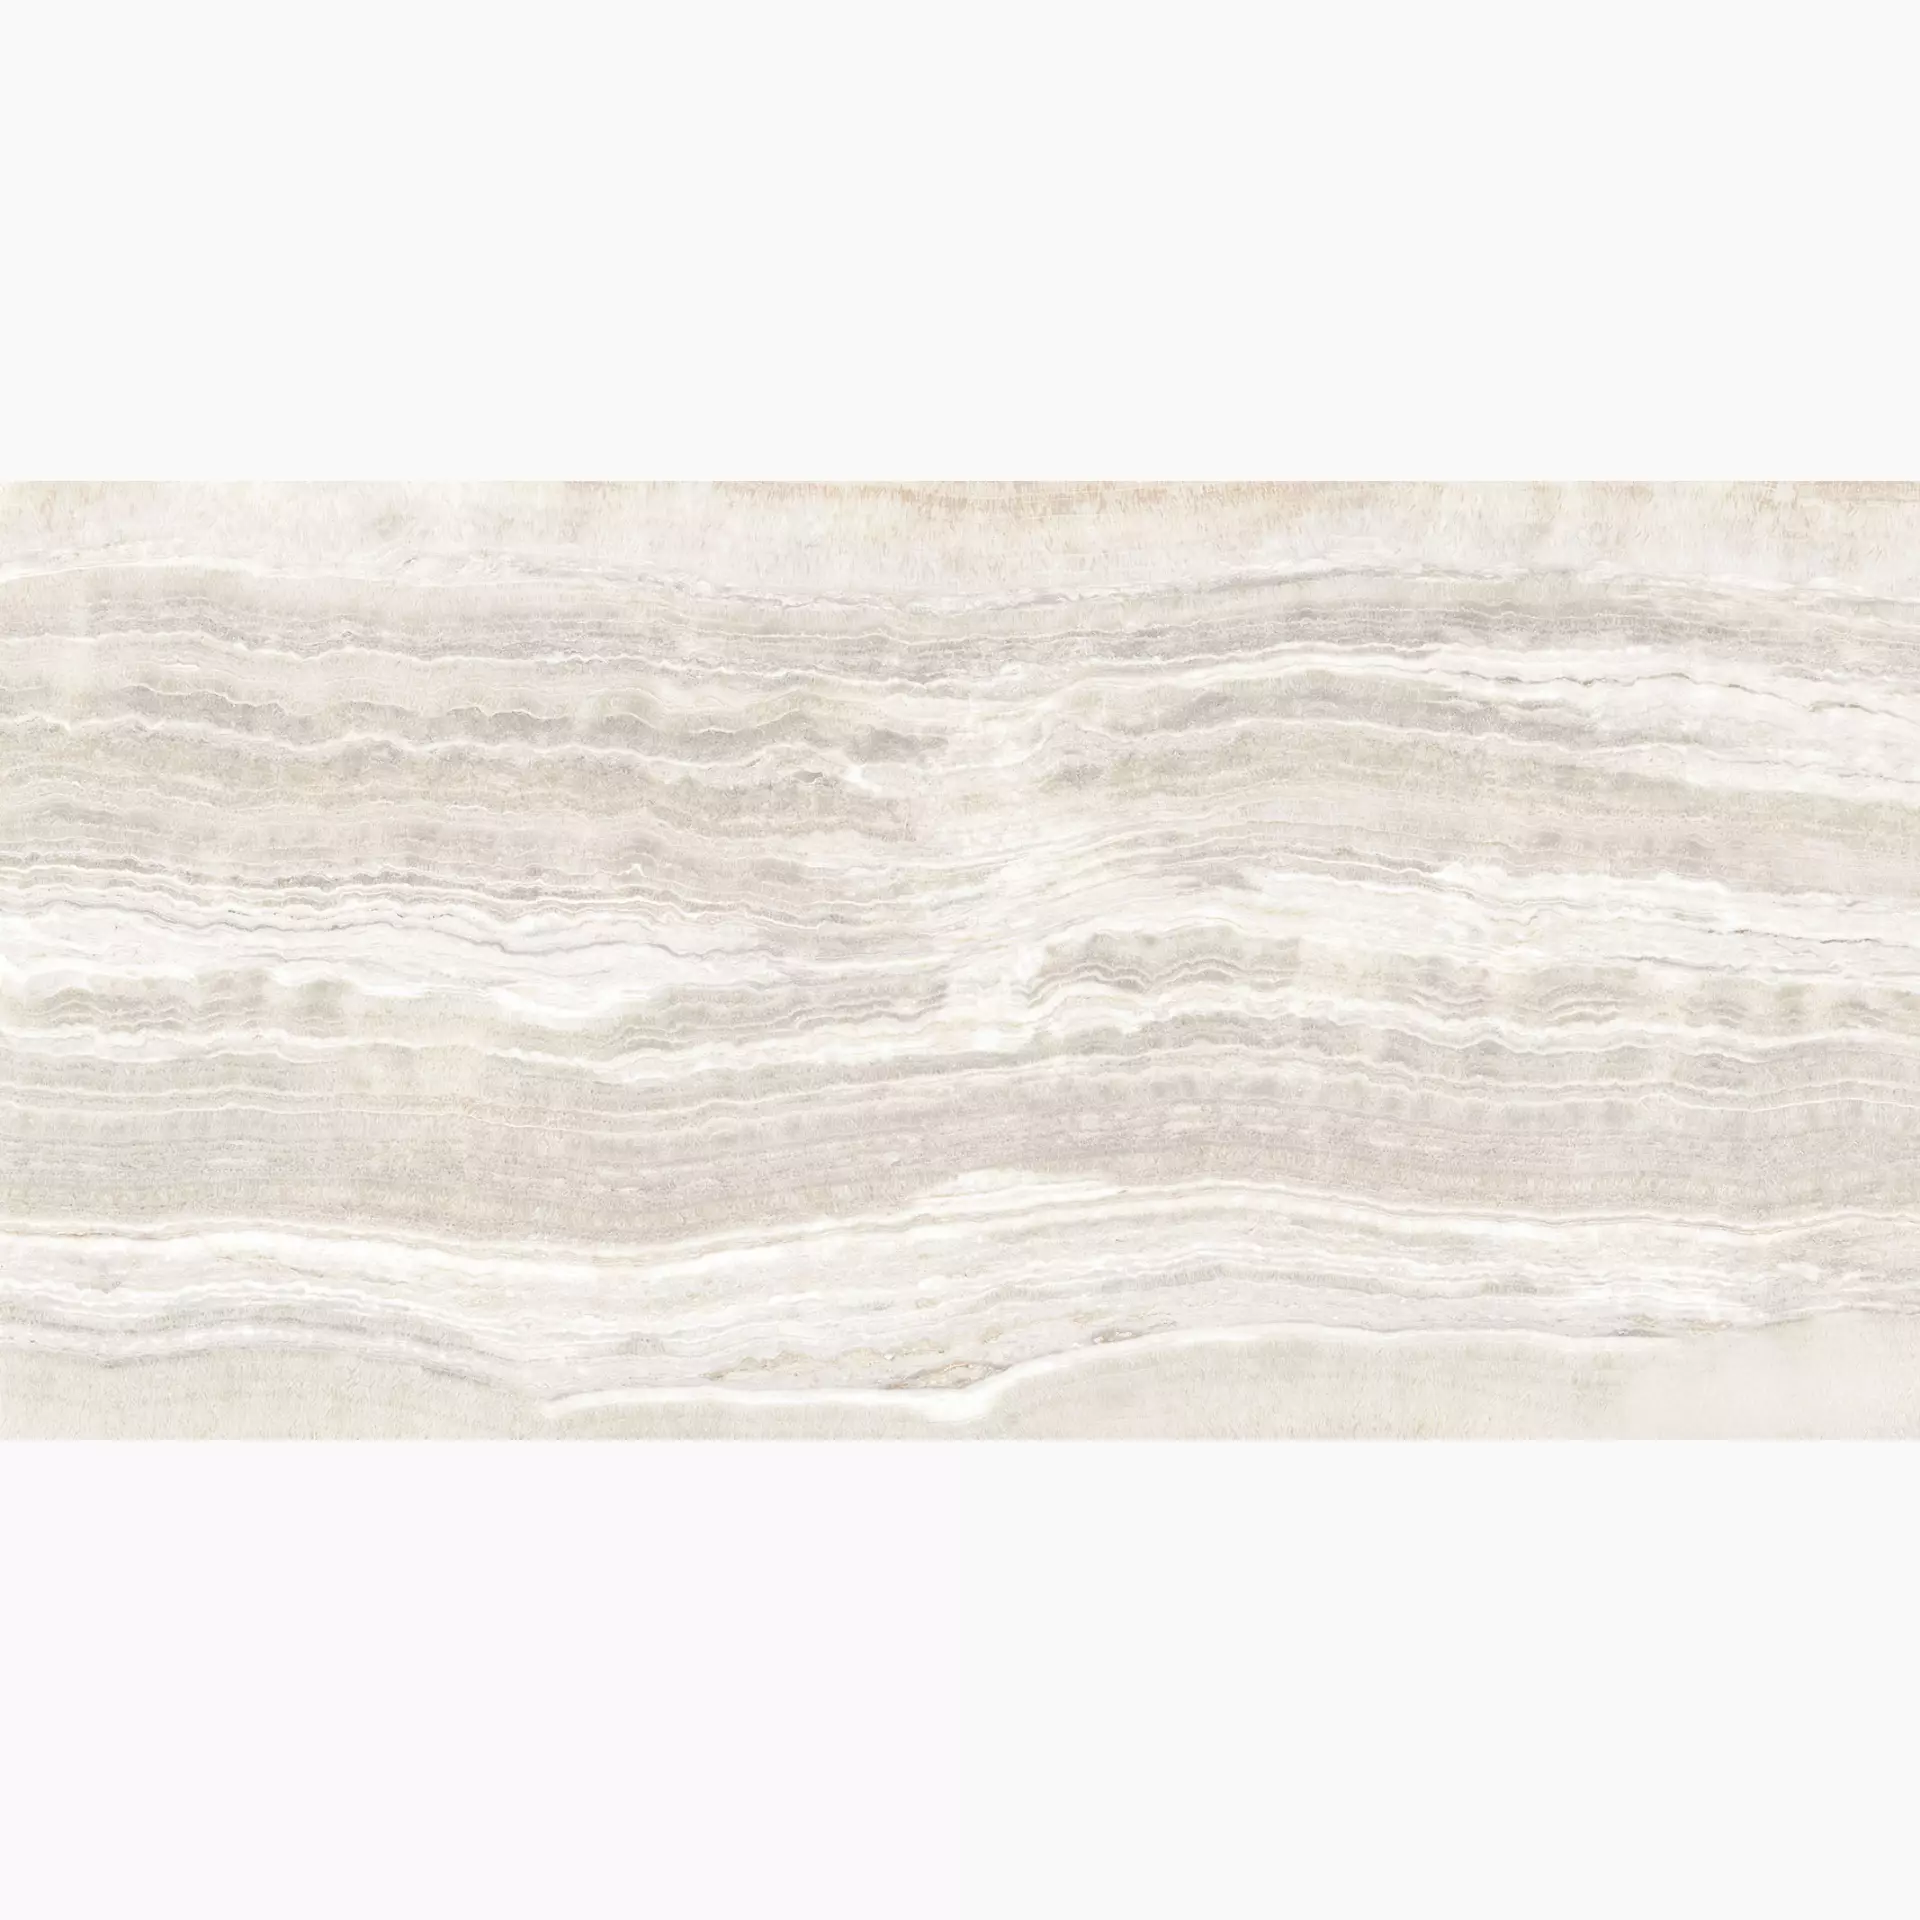 Florim Onyx Of Cerim Sand Naturale – Matt 754391 60x120cm rectified 9mm